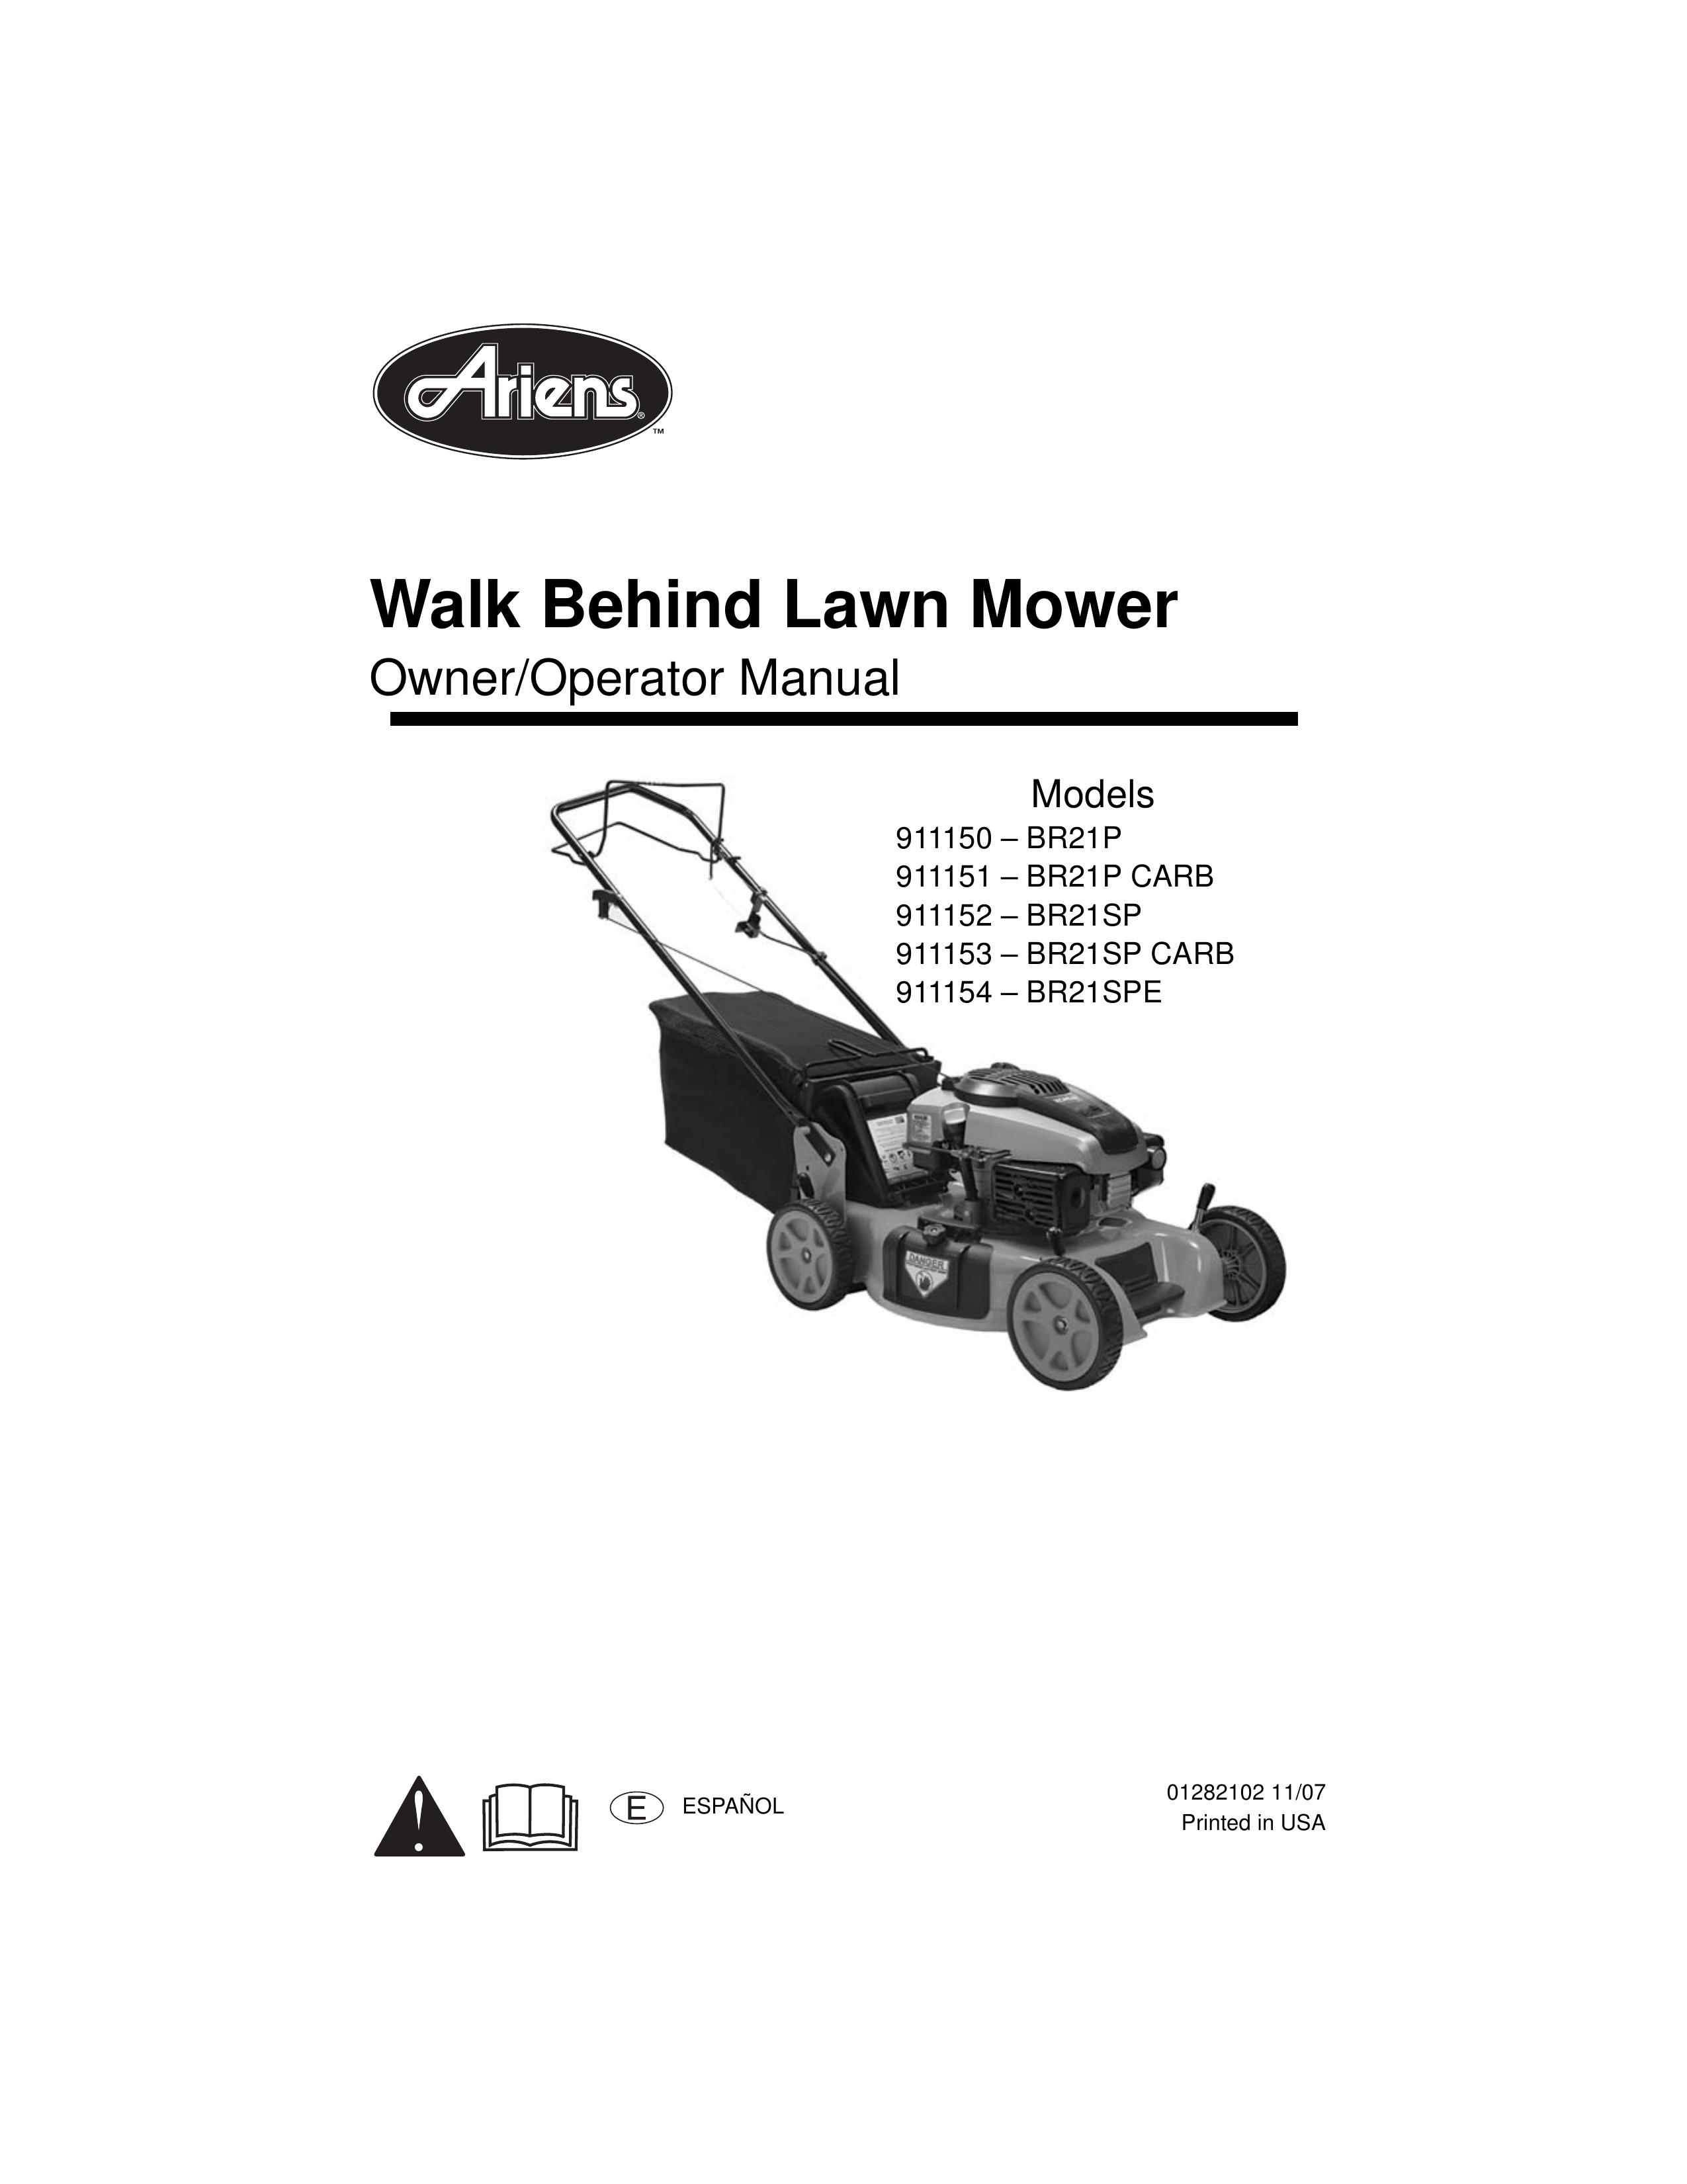 Ariens 911150 - BR21P Lawn Mower User Manual